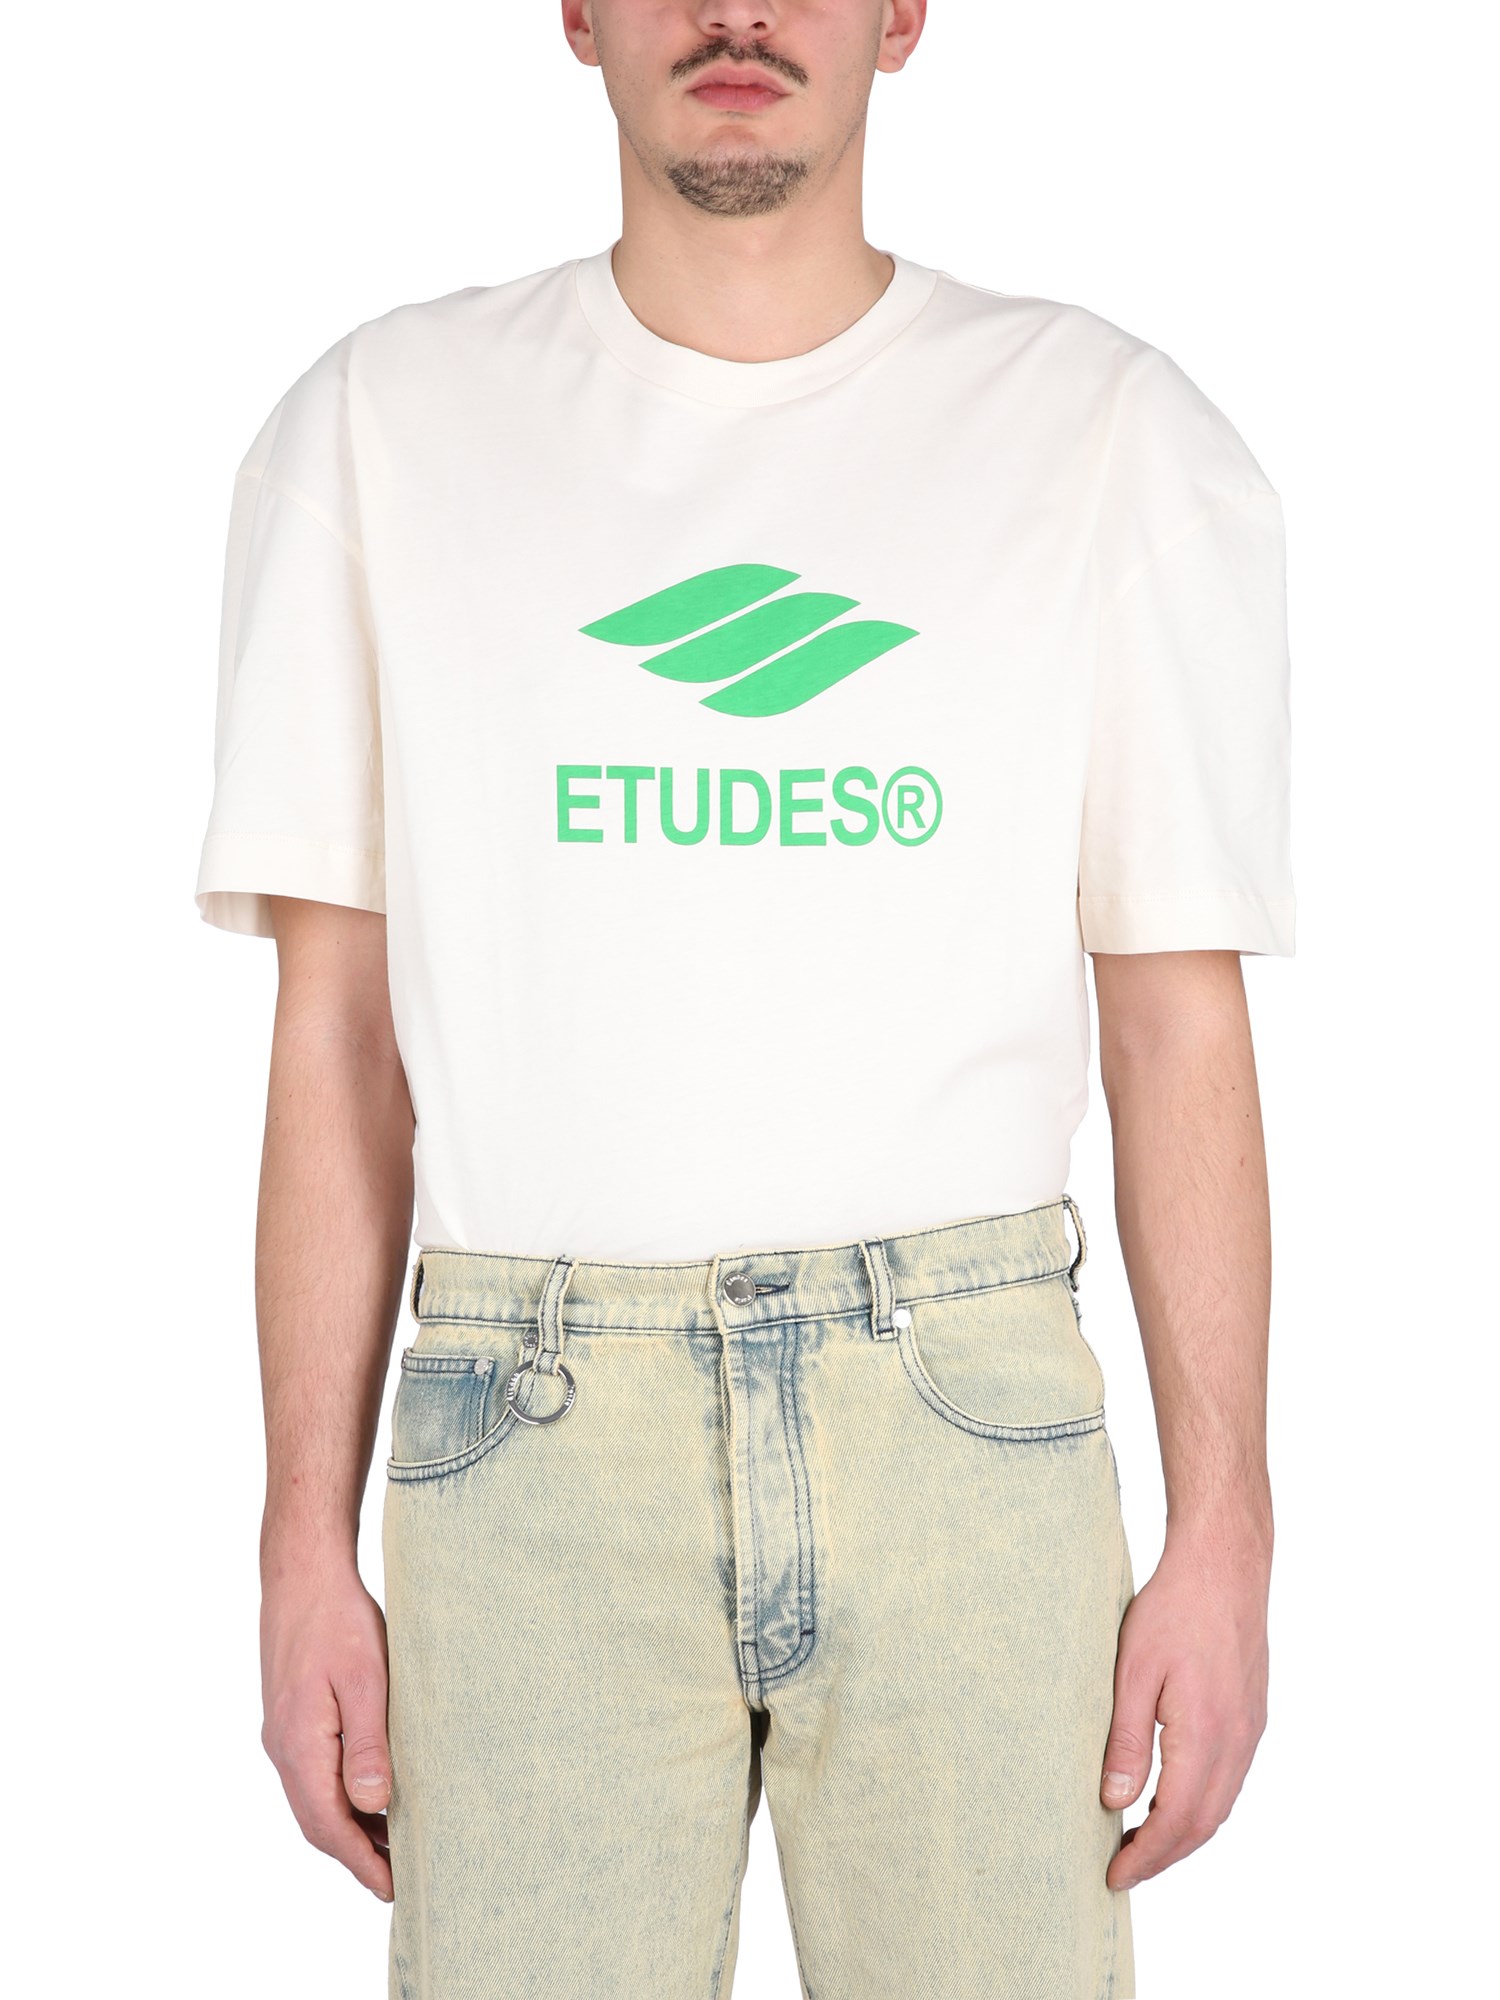 Ã©tudes t-shirt with logo